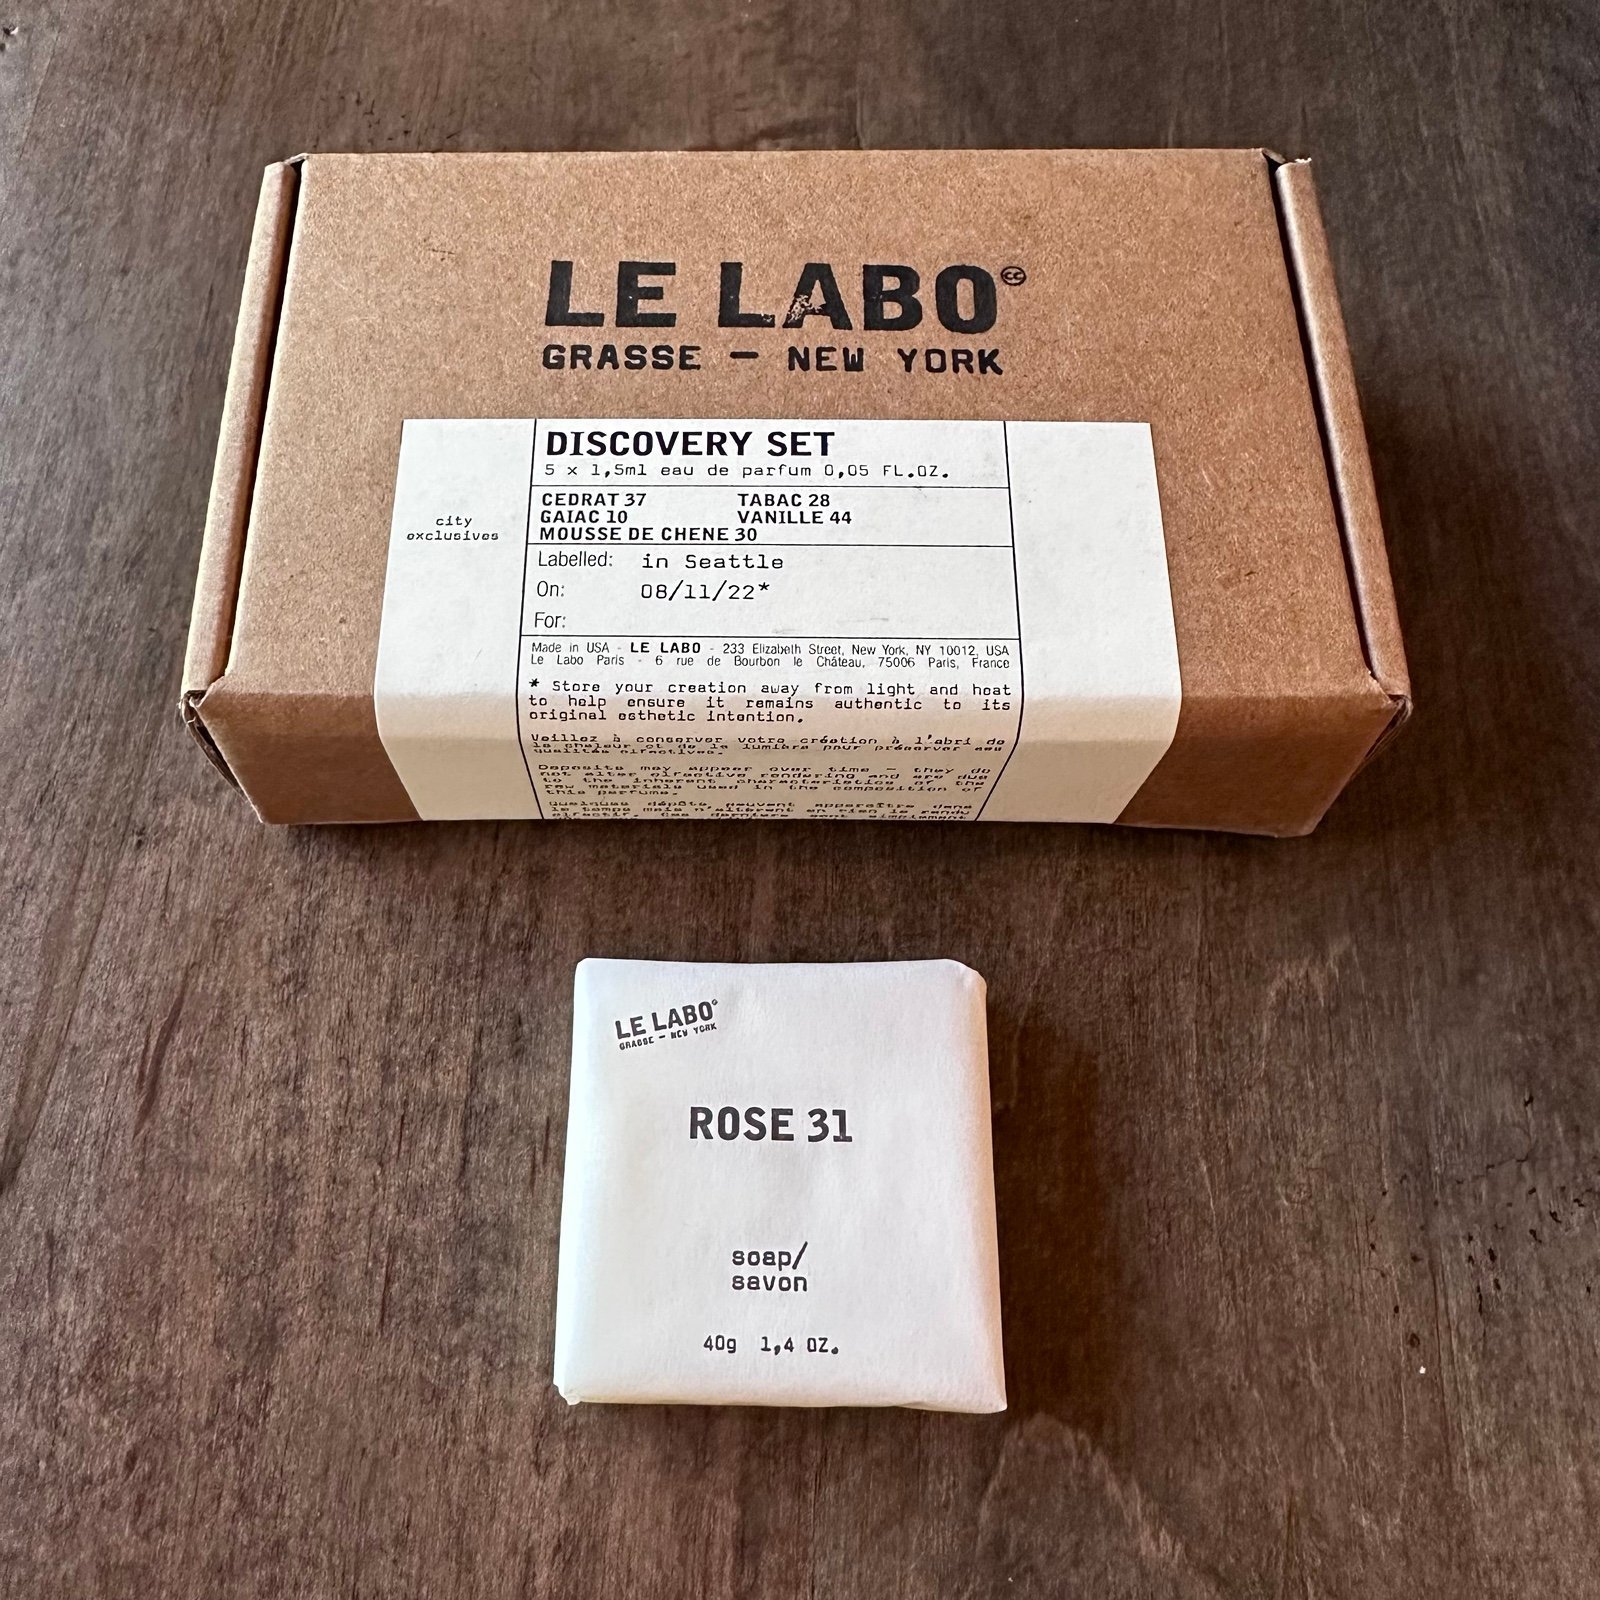 Le Labo City Exclusives Discovery Set + Bonus Rose 31 bar soap holJ4iRH2